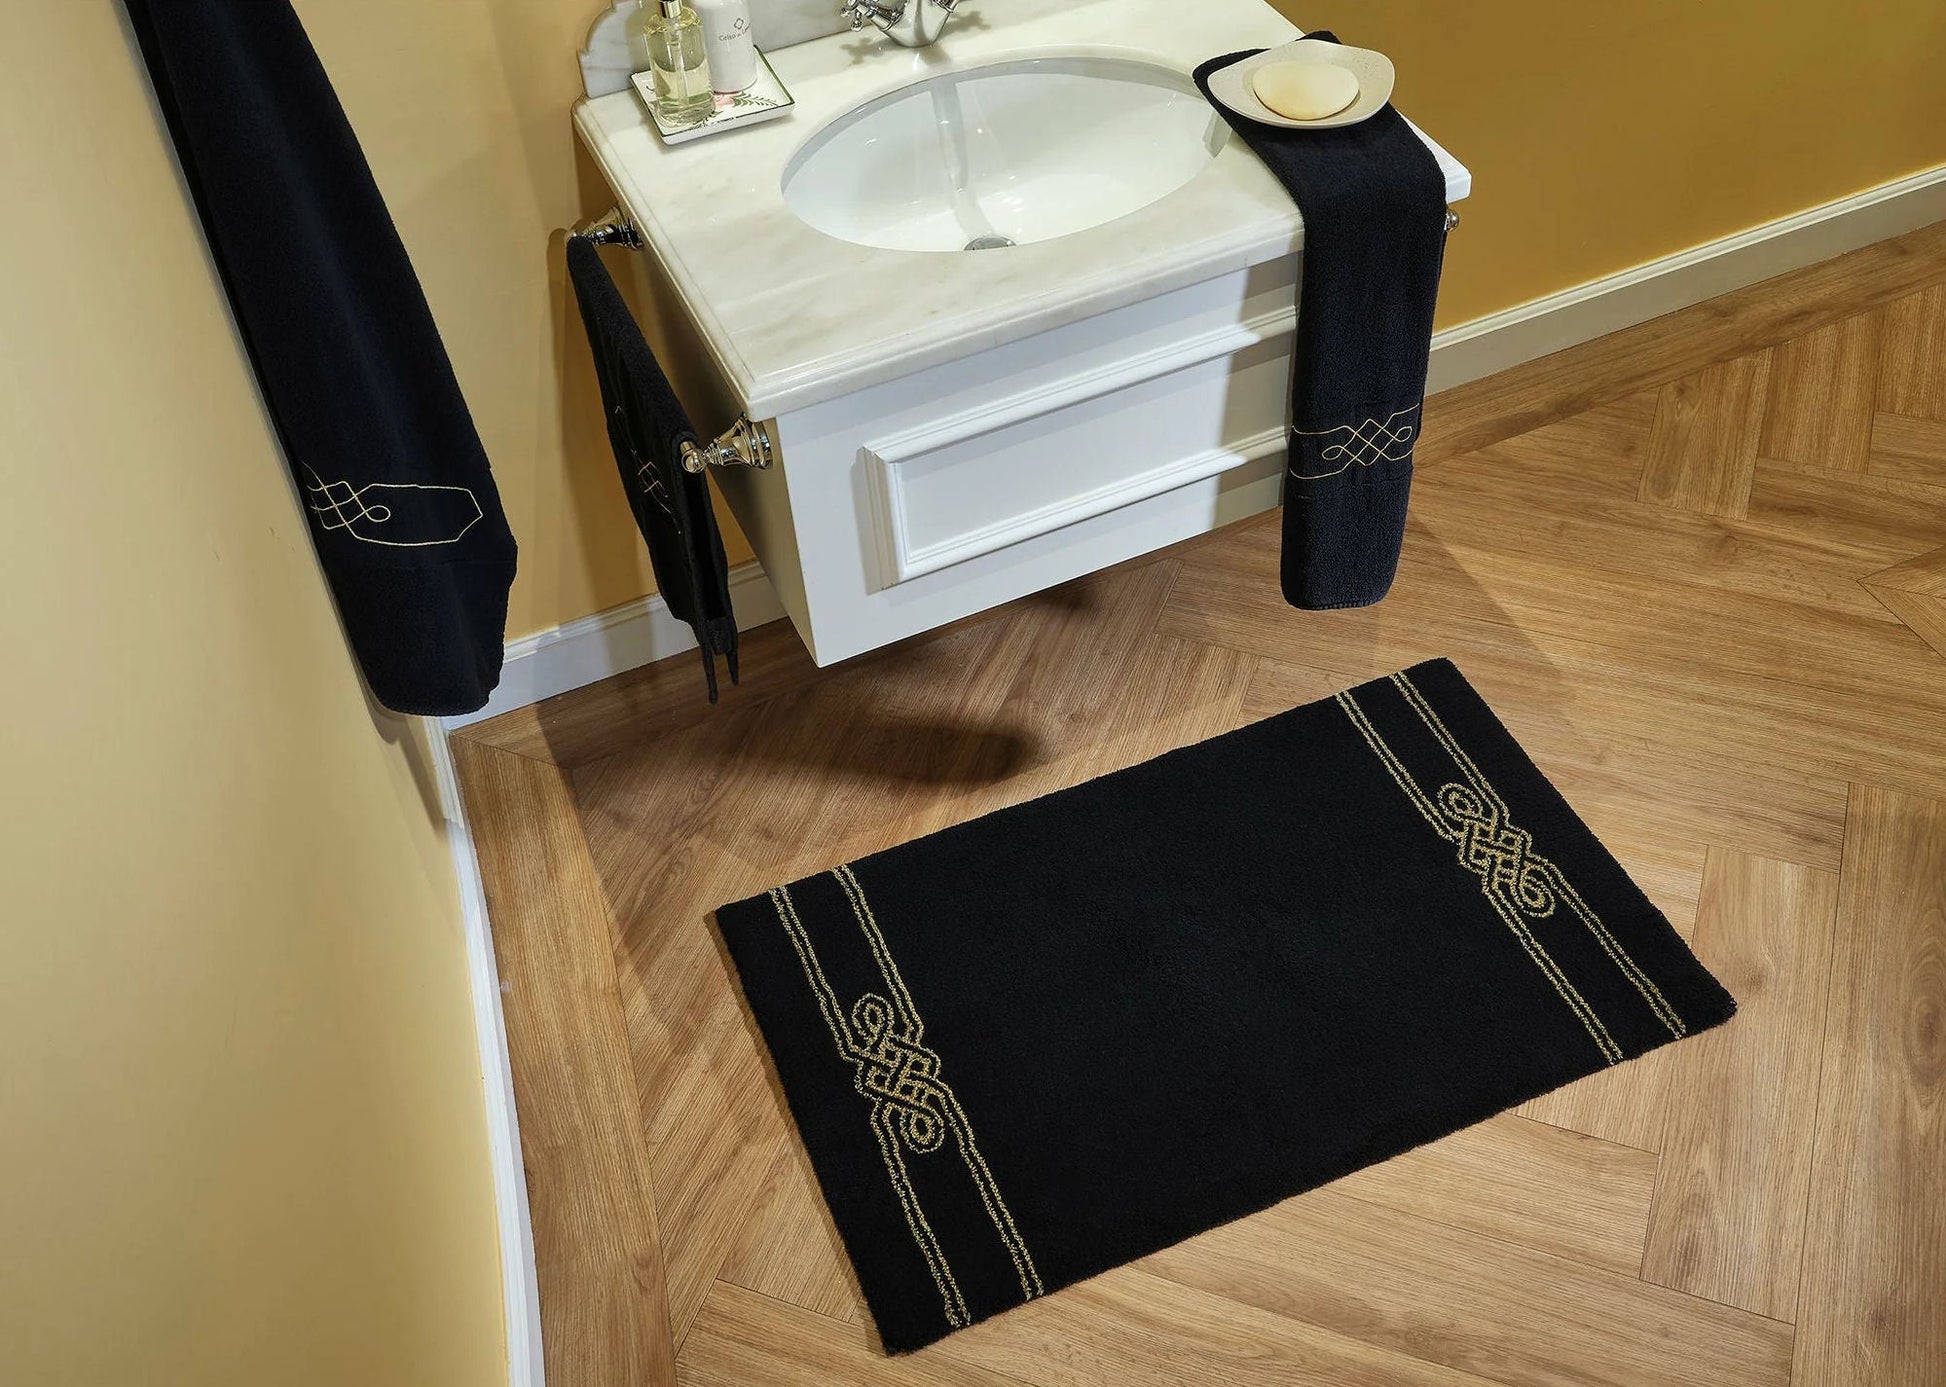 Luxury White and Silver SPENCER bath rug - |VESIMI Design|